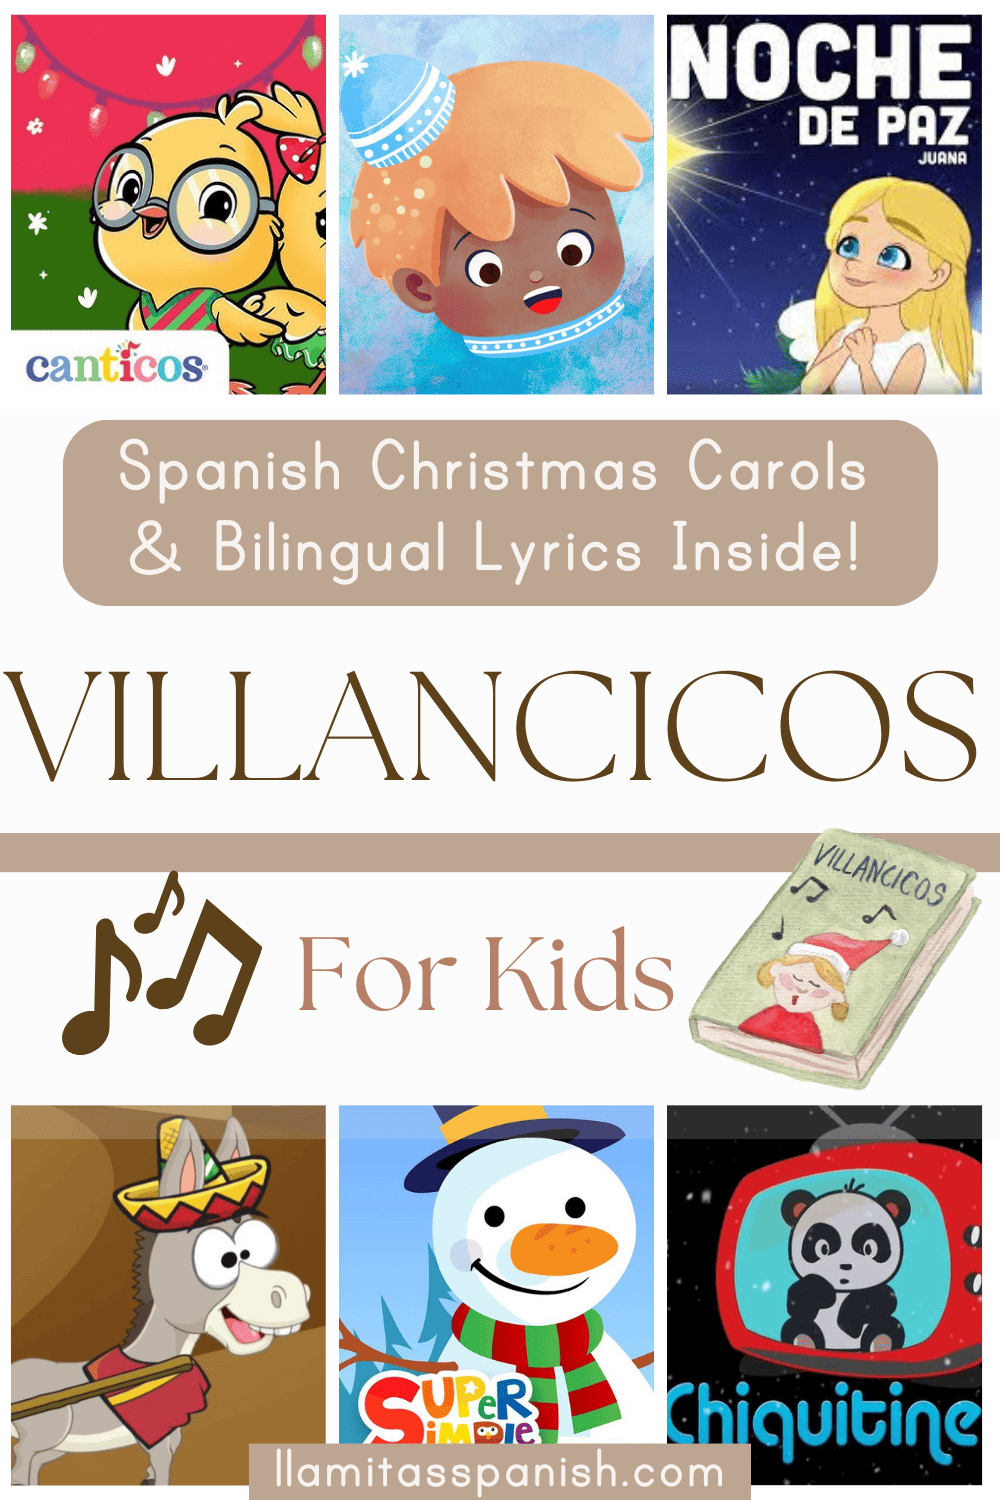 Villancicos Spanish Carols for kids